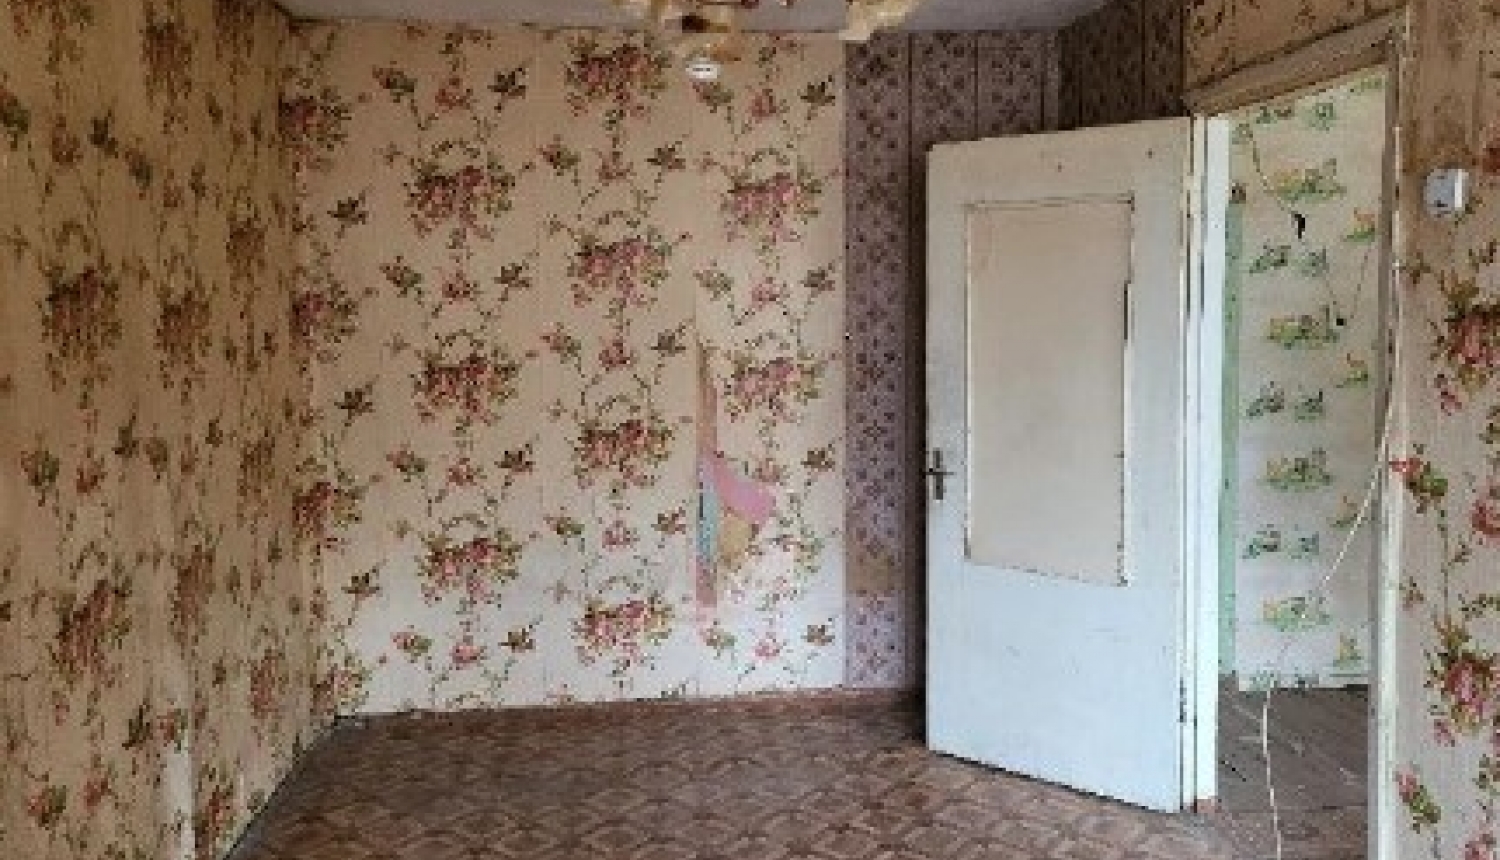 Istaba, sienas ar raibām tapetēm, baltas durvis